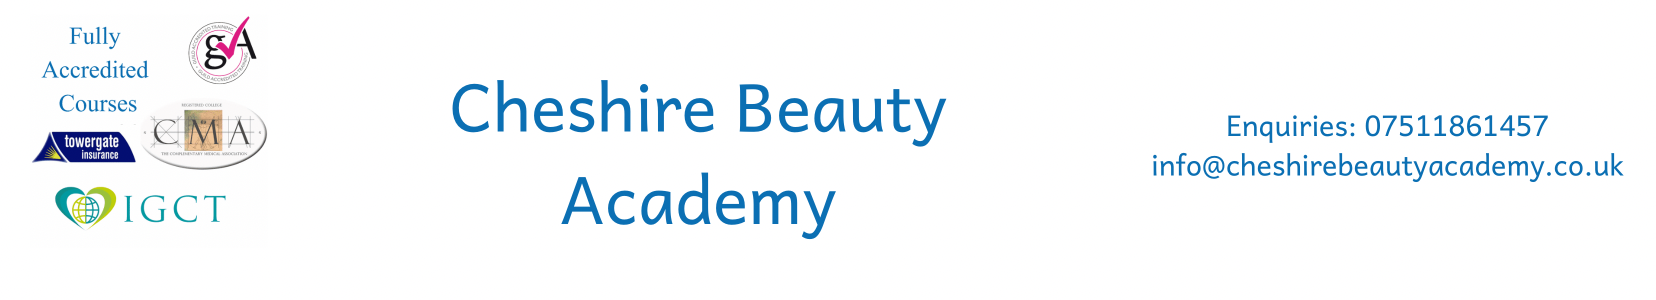 Cheshire Beauty Academy